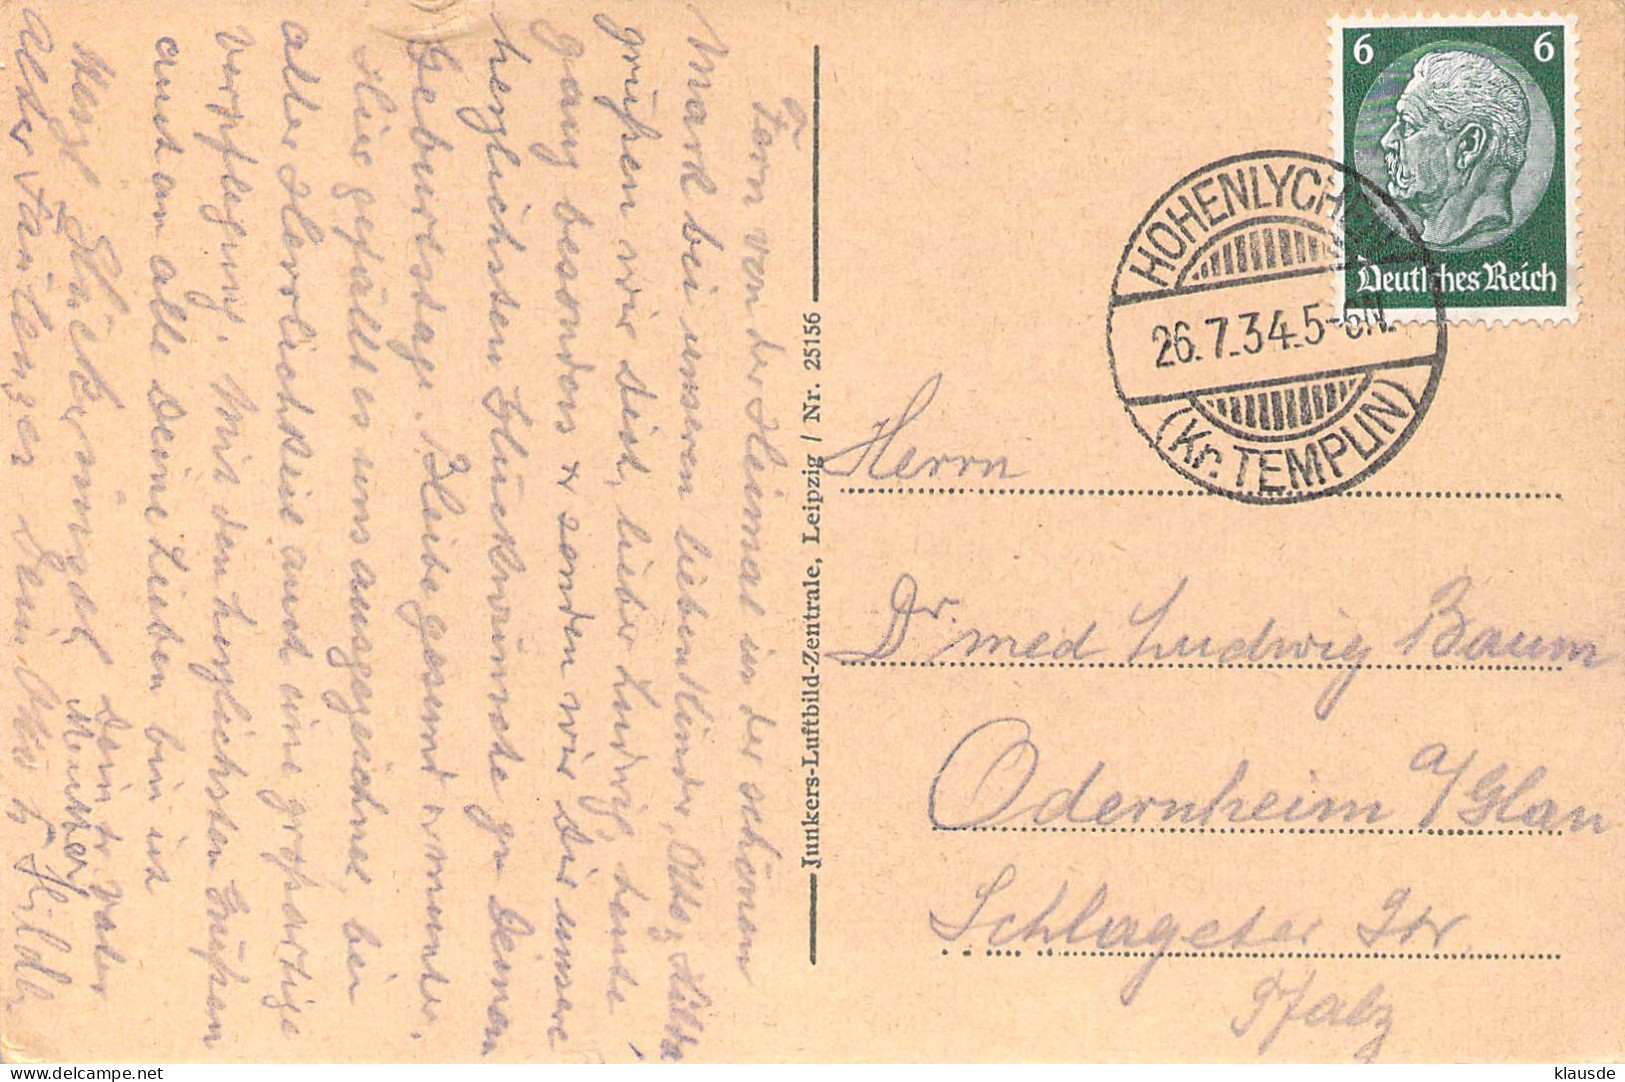 Hohenlychen - Heilstätten,Zenssee Gel.1934 - Templin